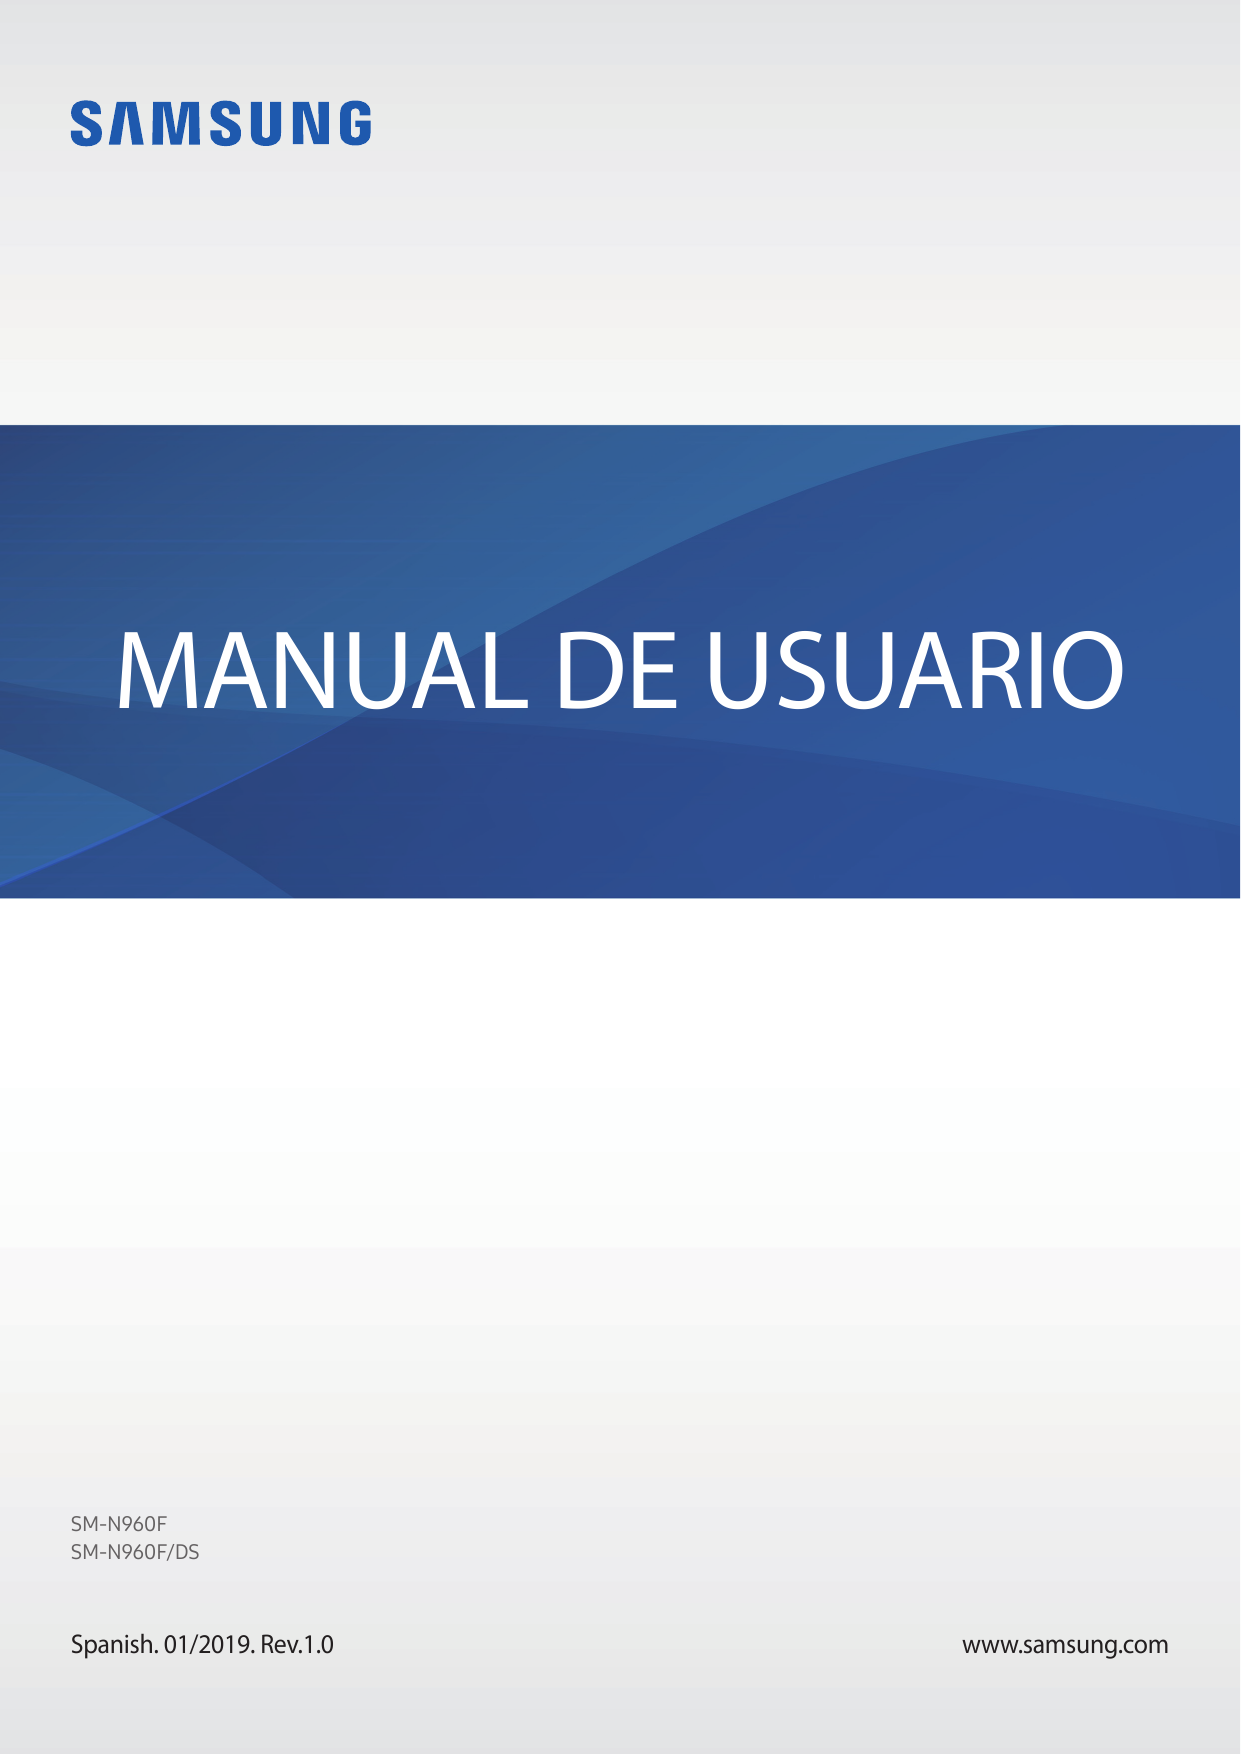 MANUAL DE USUARIOSM-N960FSM-N960F/DSSpanish. 01/2019. Rev.1.0www.samsung.com